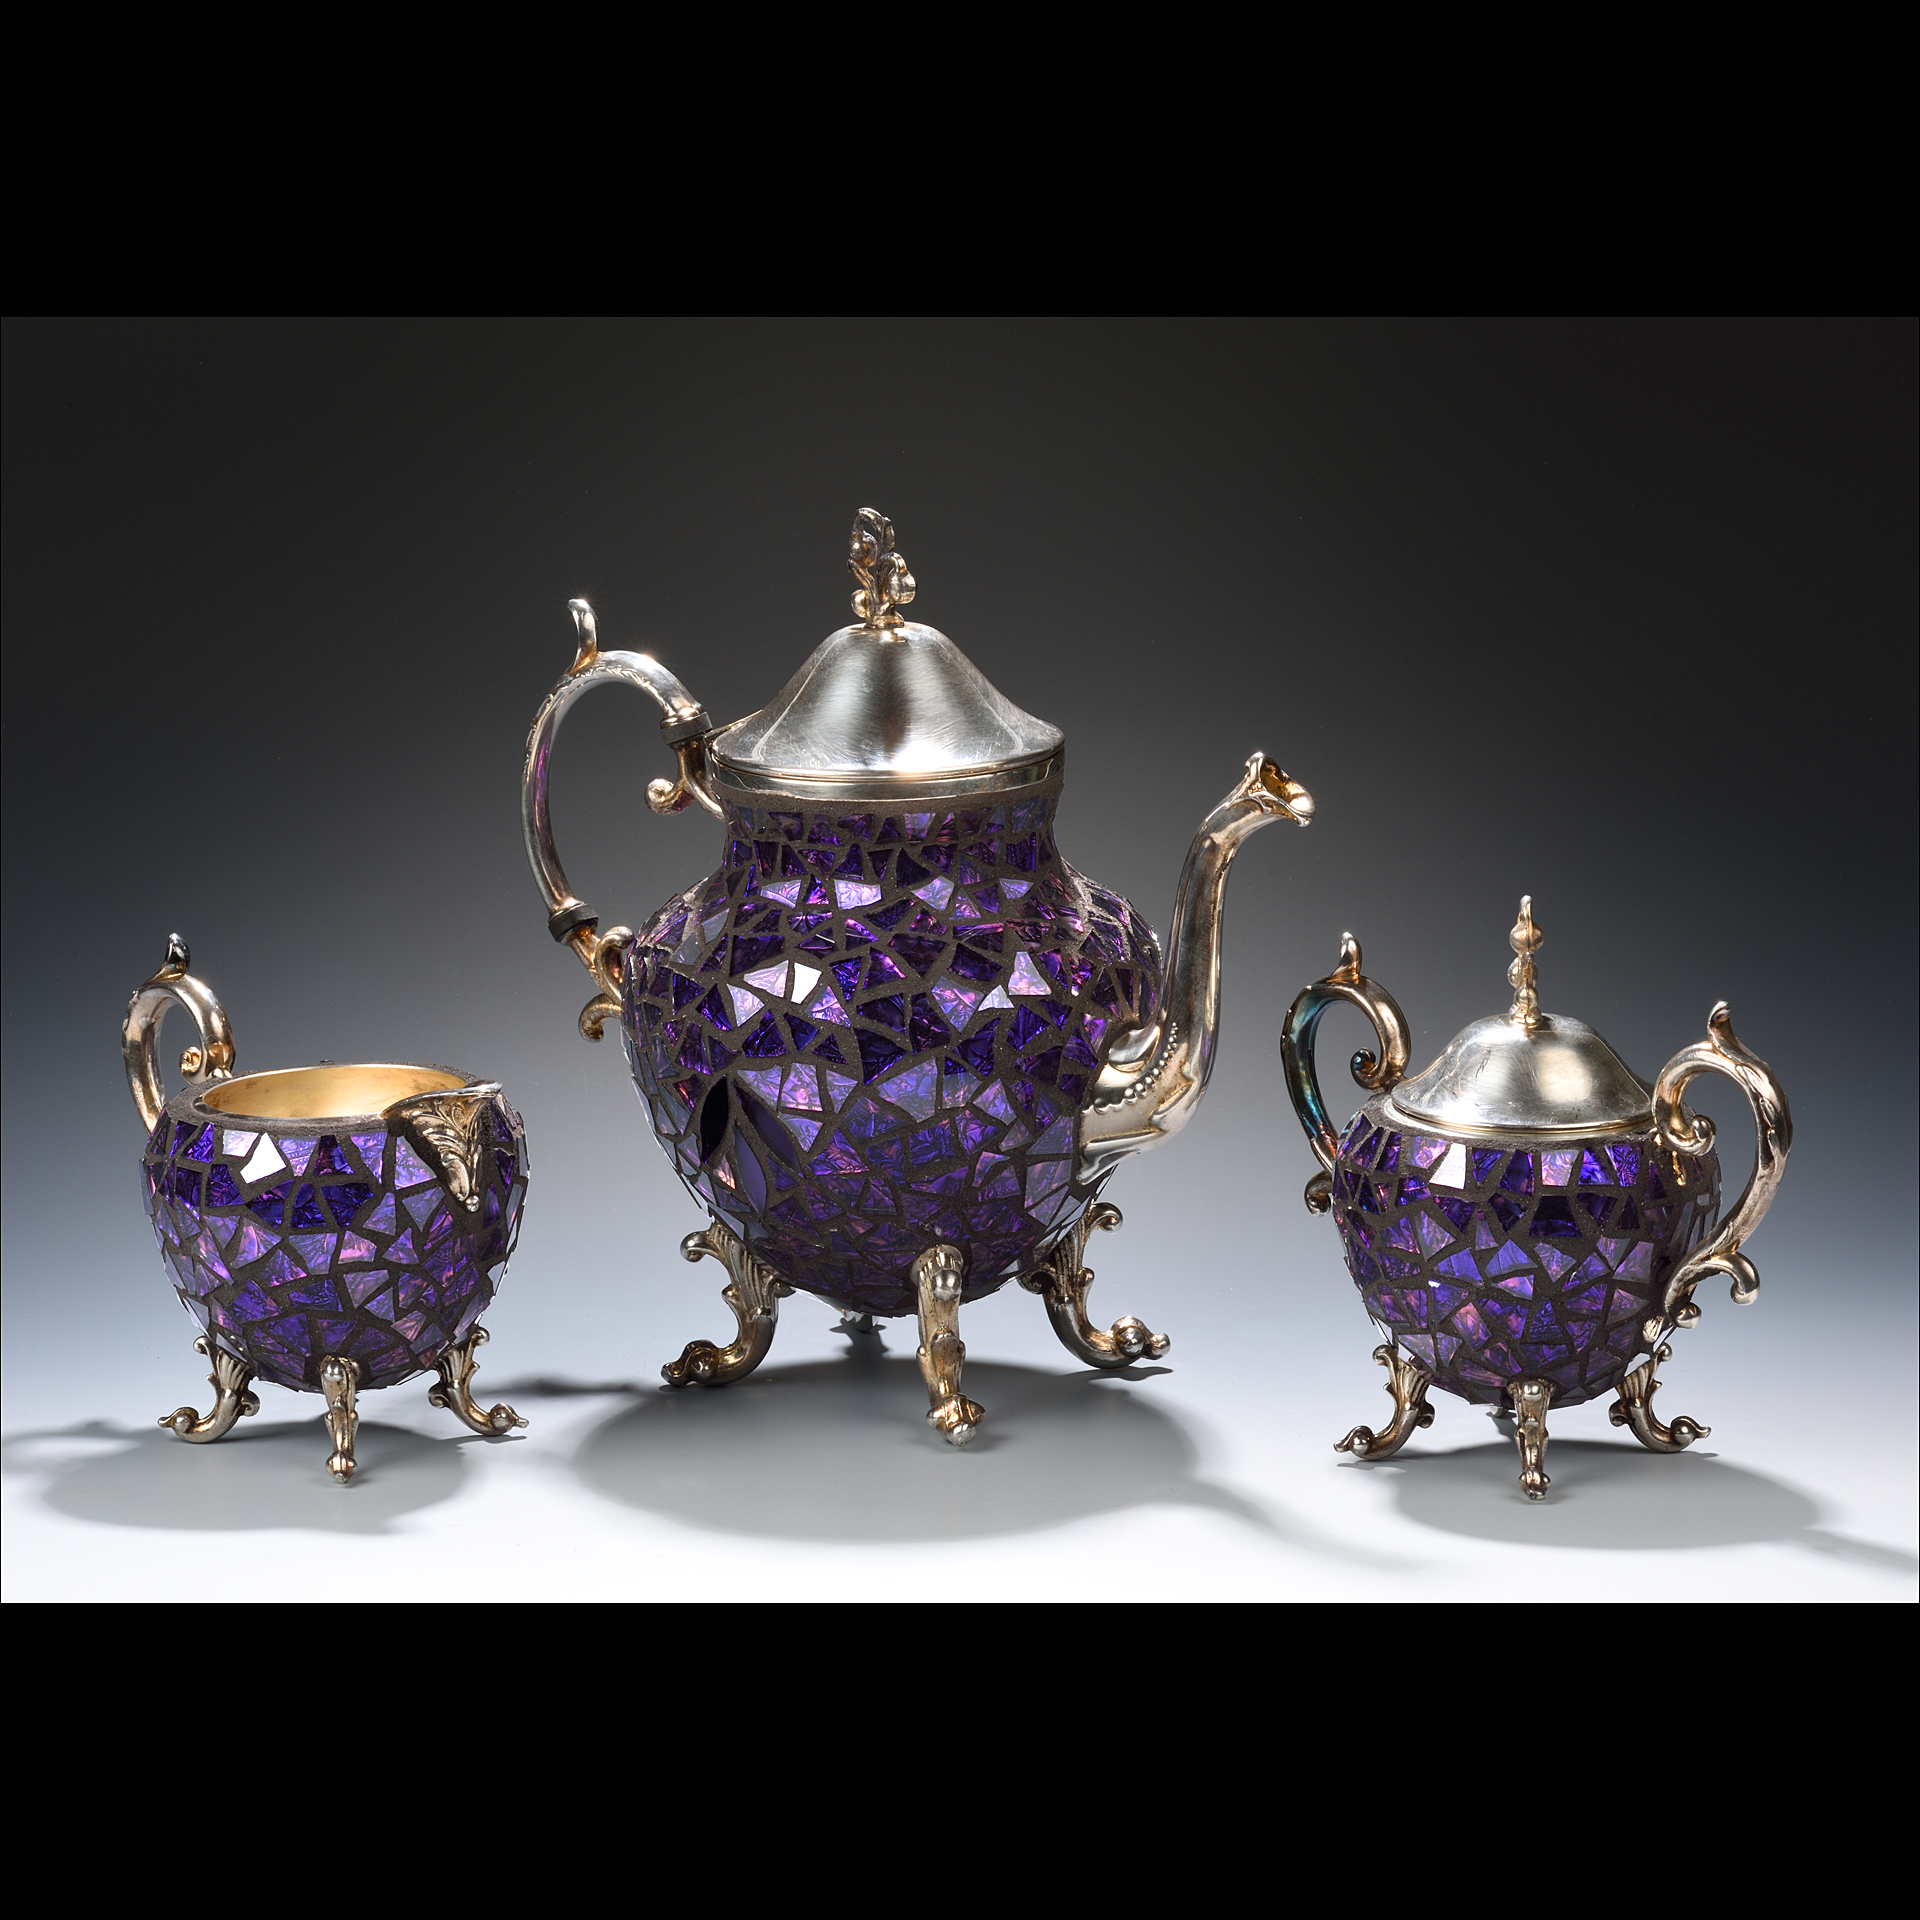 Two purple teapots with a purple teacup